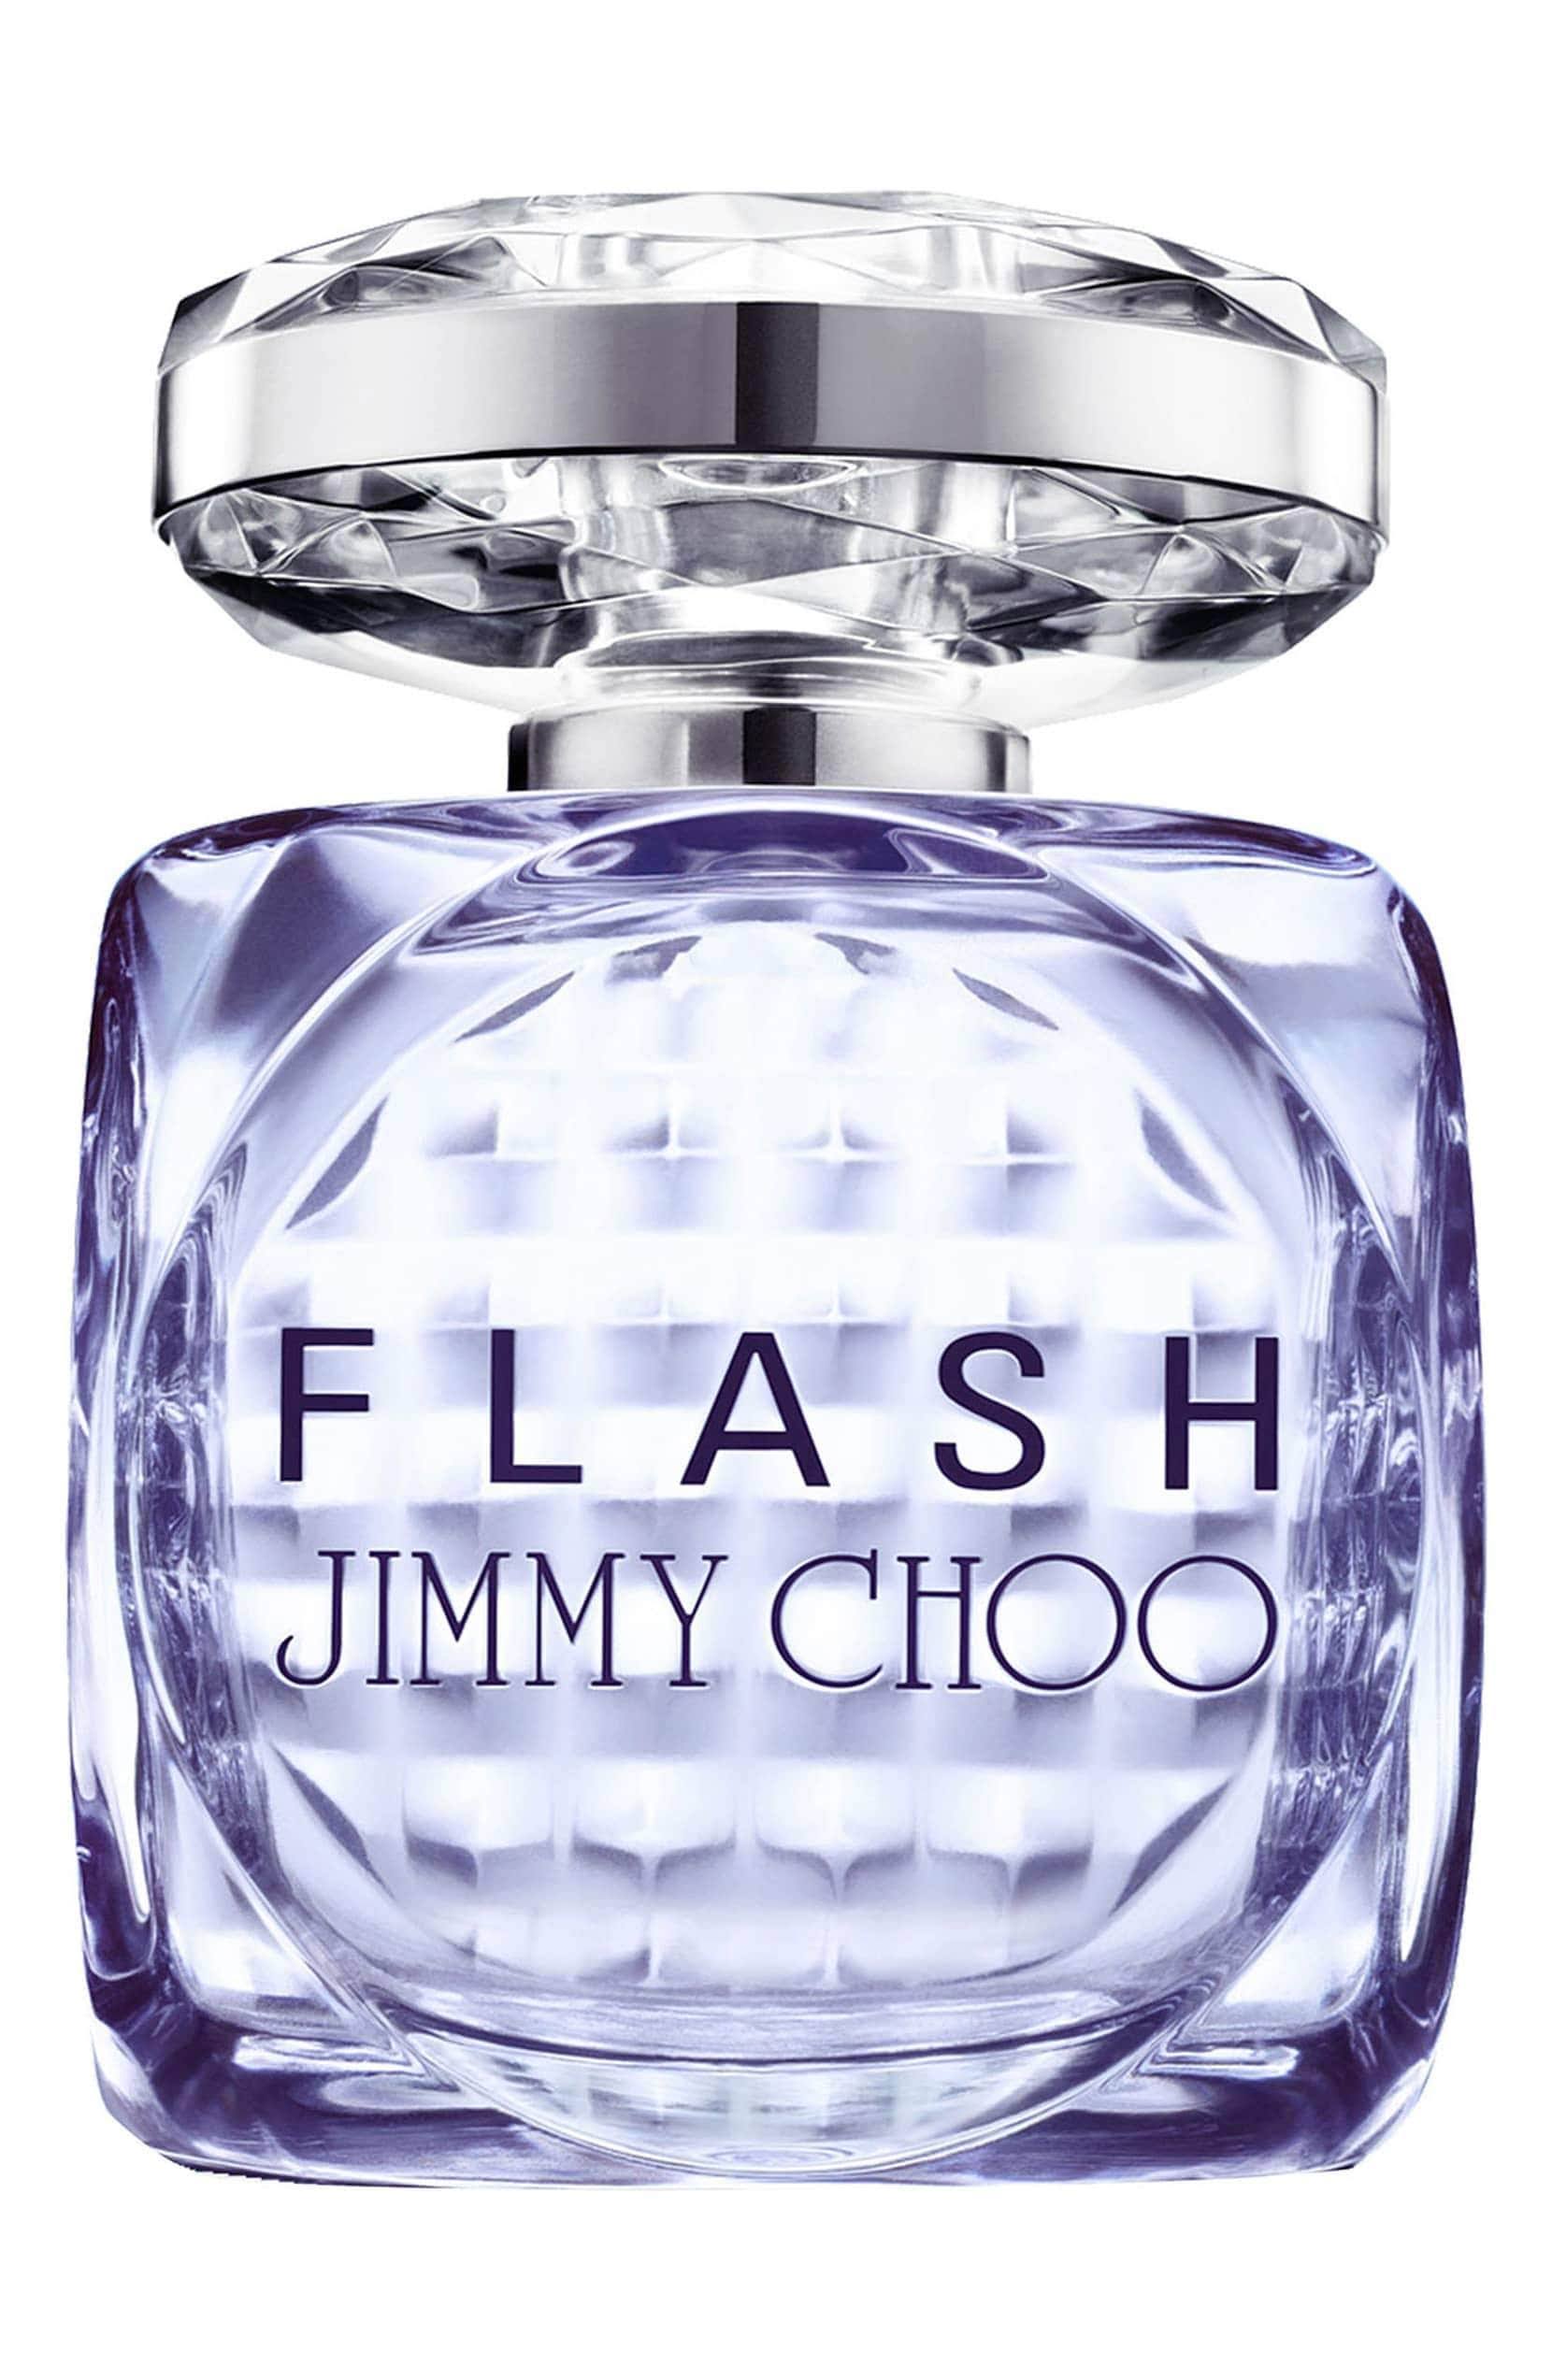 Jimmy Choo Flash for Women Eau de Parfum Spray